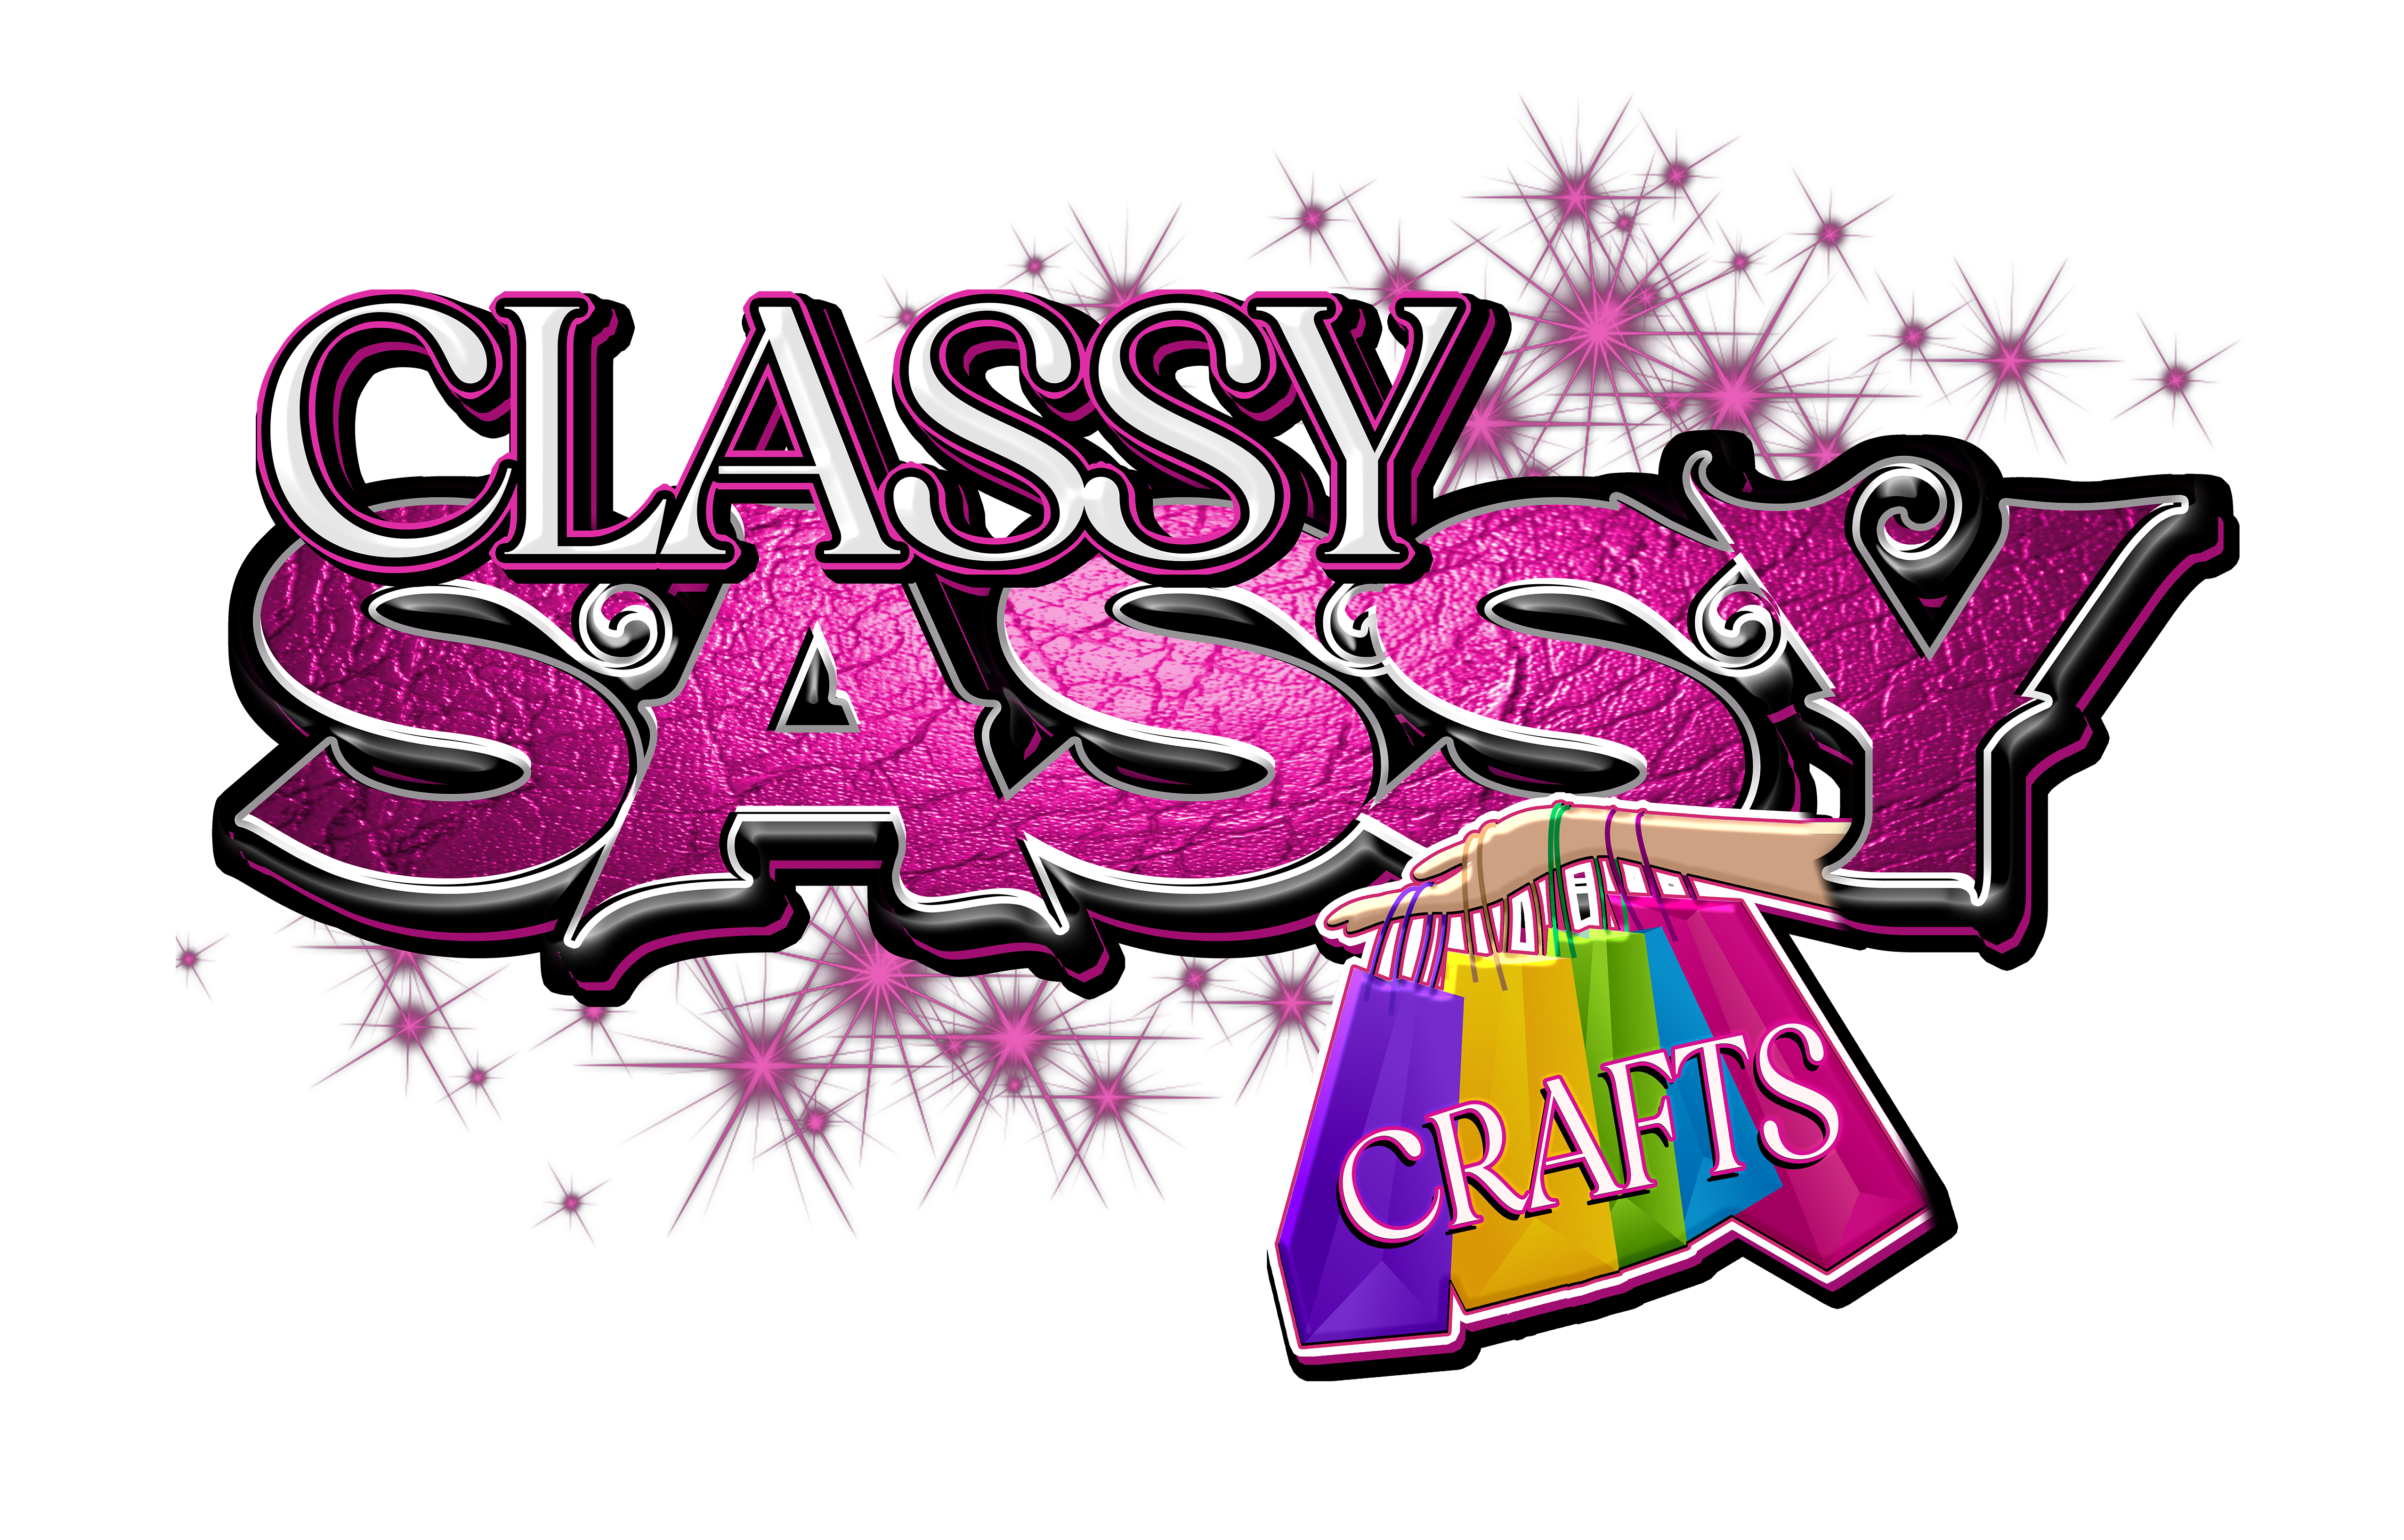 Classy Sassy Crafts